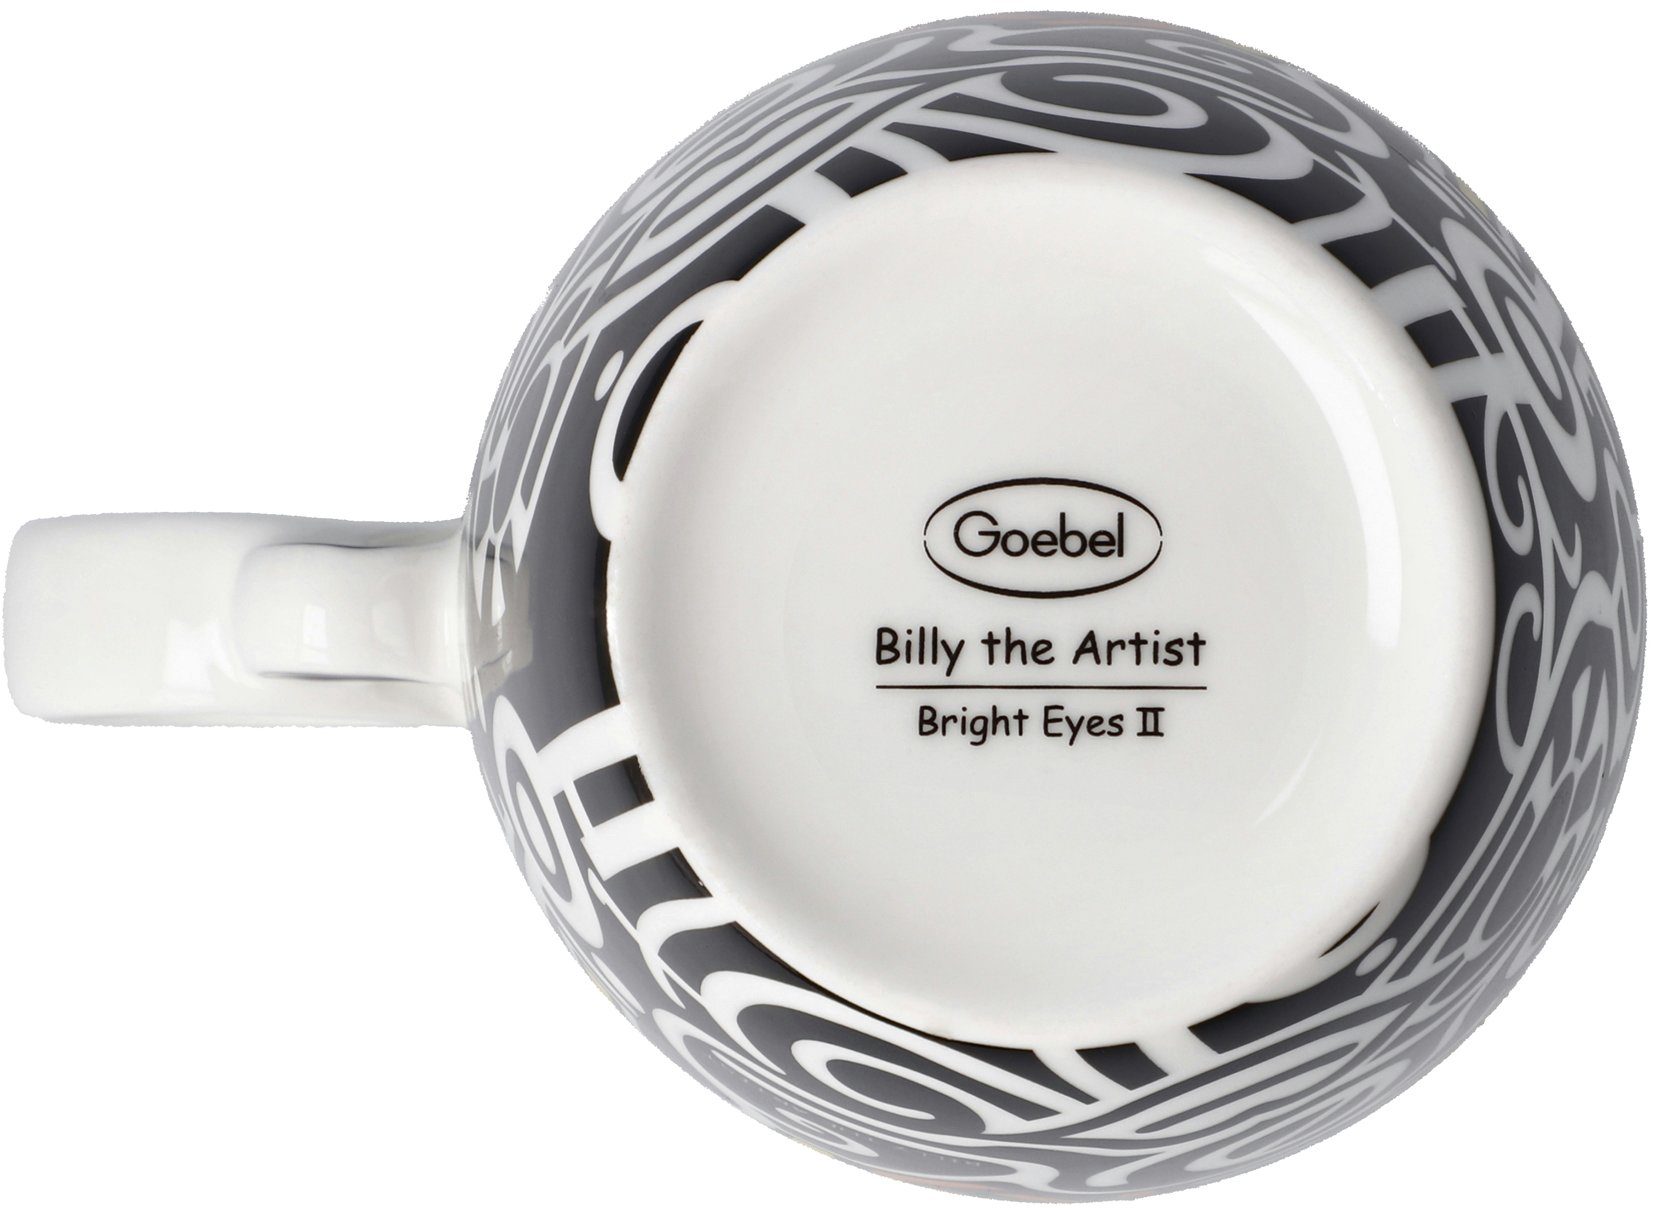 Eyes Bright Künstlertasse, Porzellan, Artist Art, The Billy Billy Tasse Artist, - Pop the Goebel II